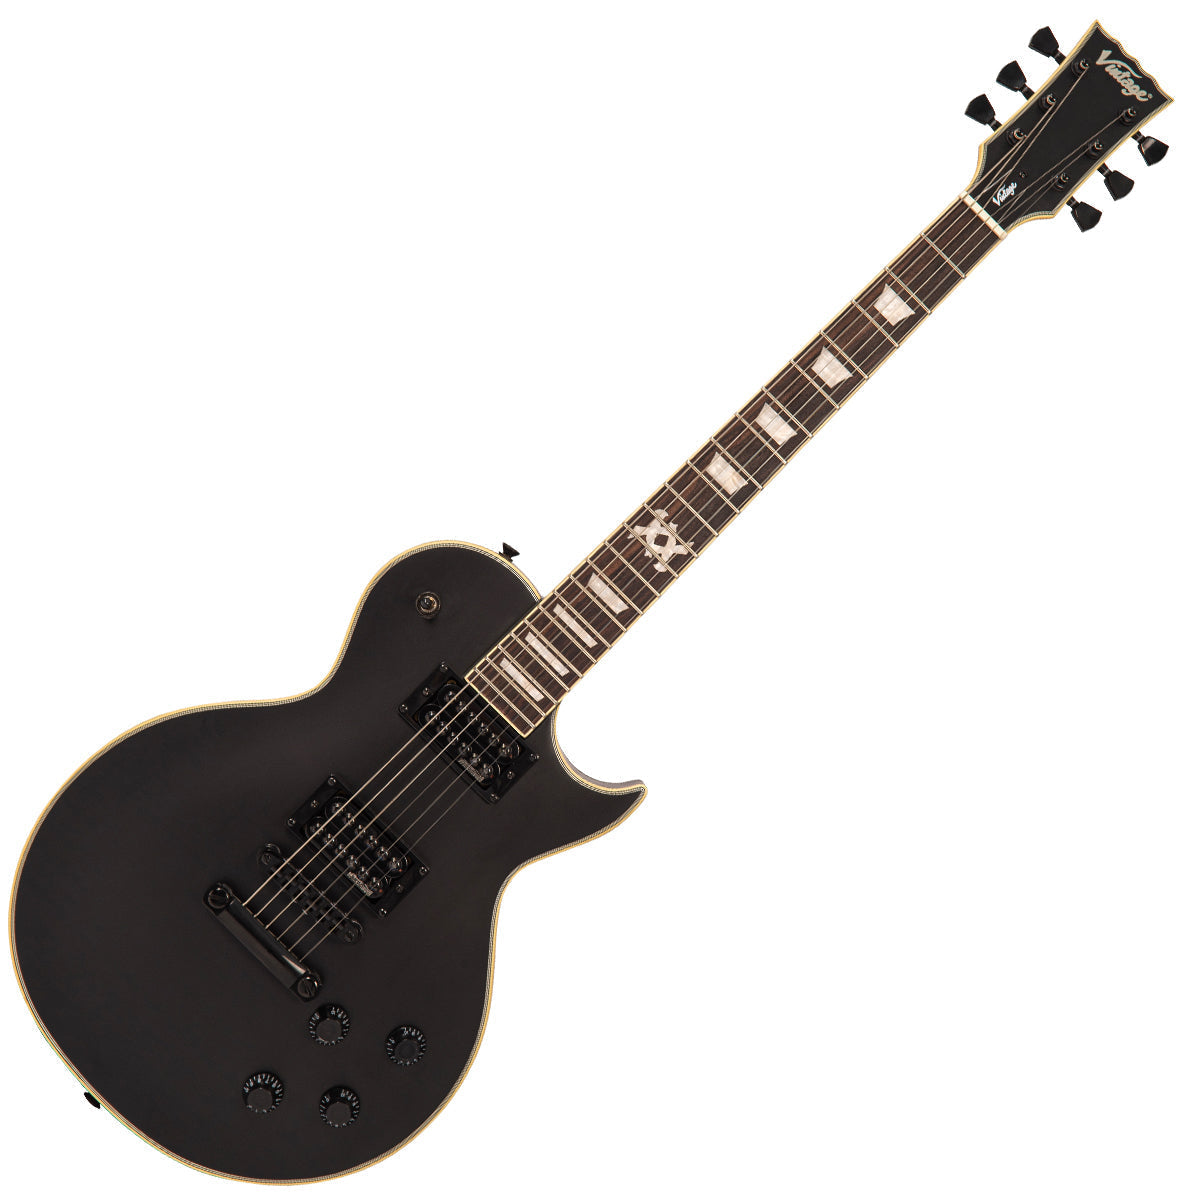 Vintage VMX Series V100 Electric Guitar ~ Satin Black, Electric Guitar for sale at Richards Guitars.